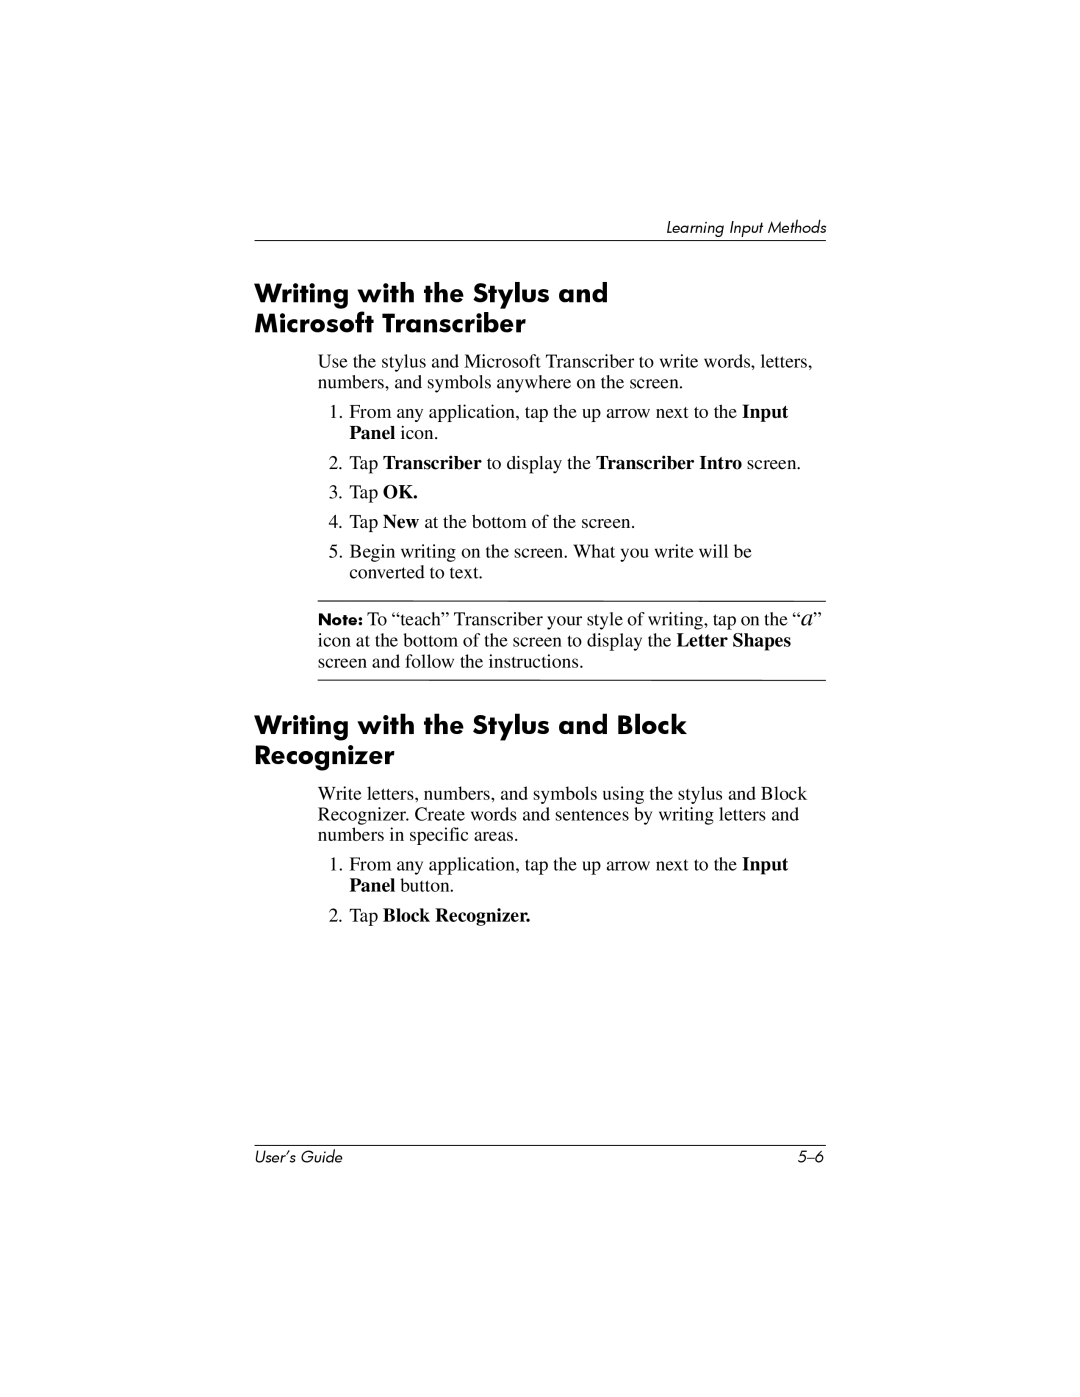 HP hx4700 manual Writing with the Stylus Microsoft Transcriber, Writing with the Stylus and Block Recognizer 